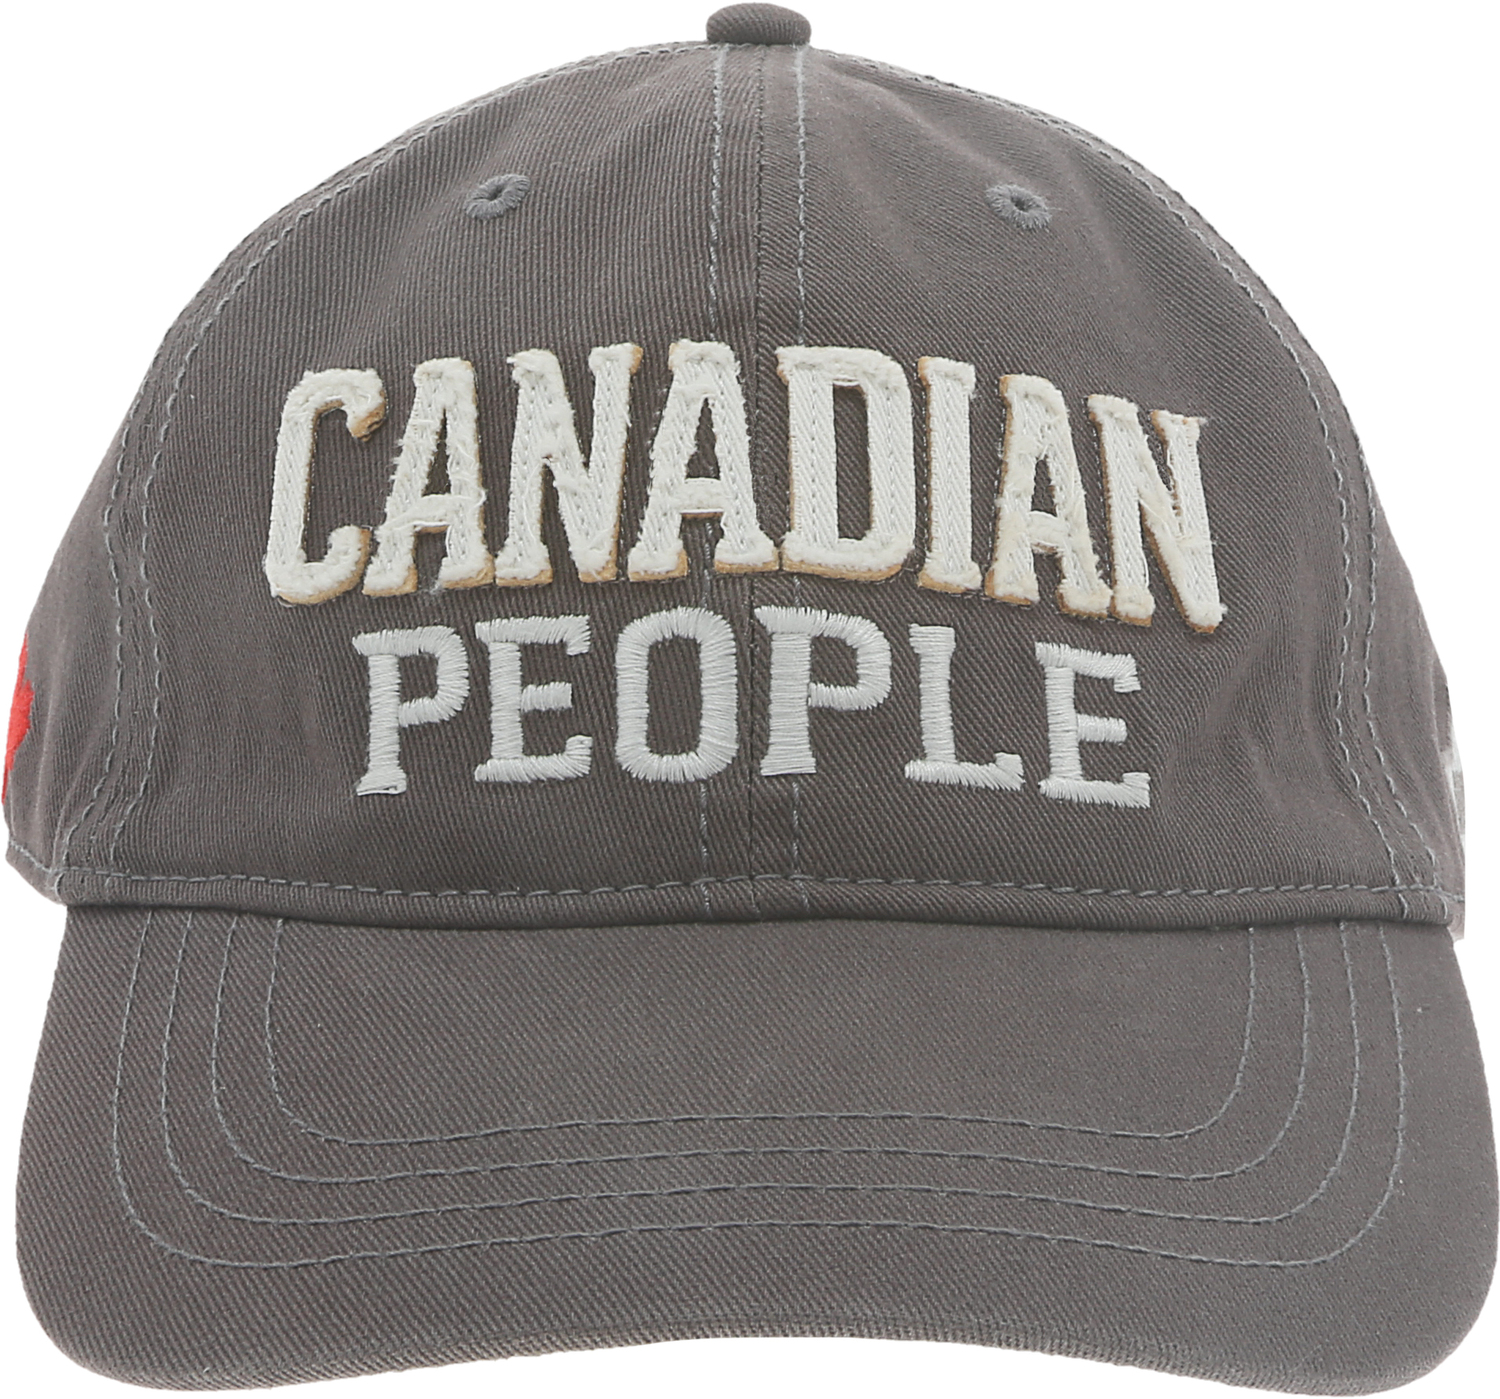 Canadian People by We People - Canadian People - Dark Gray Adjustable Hat